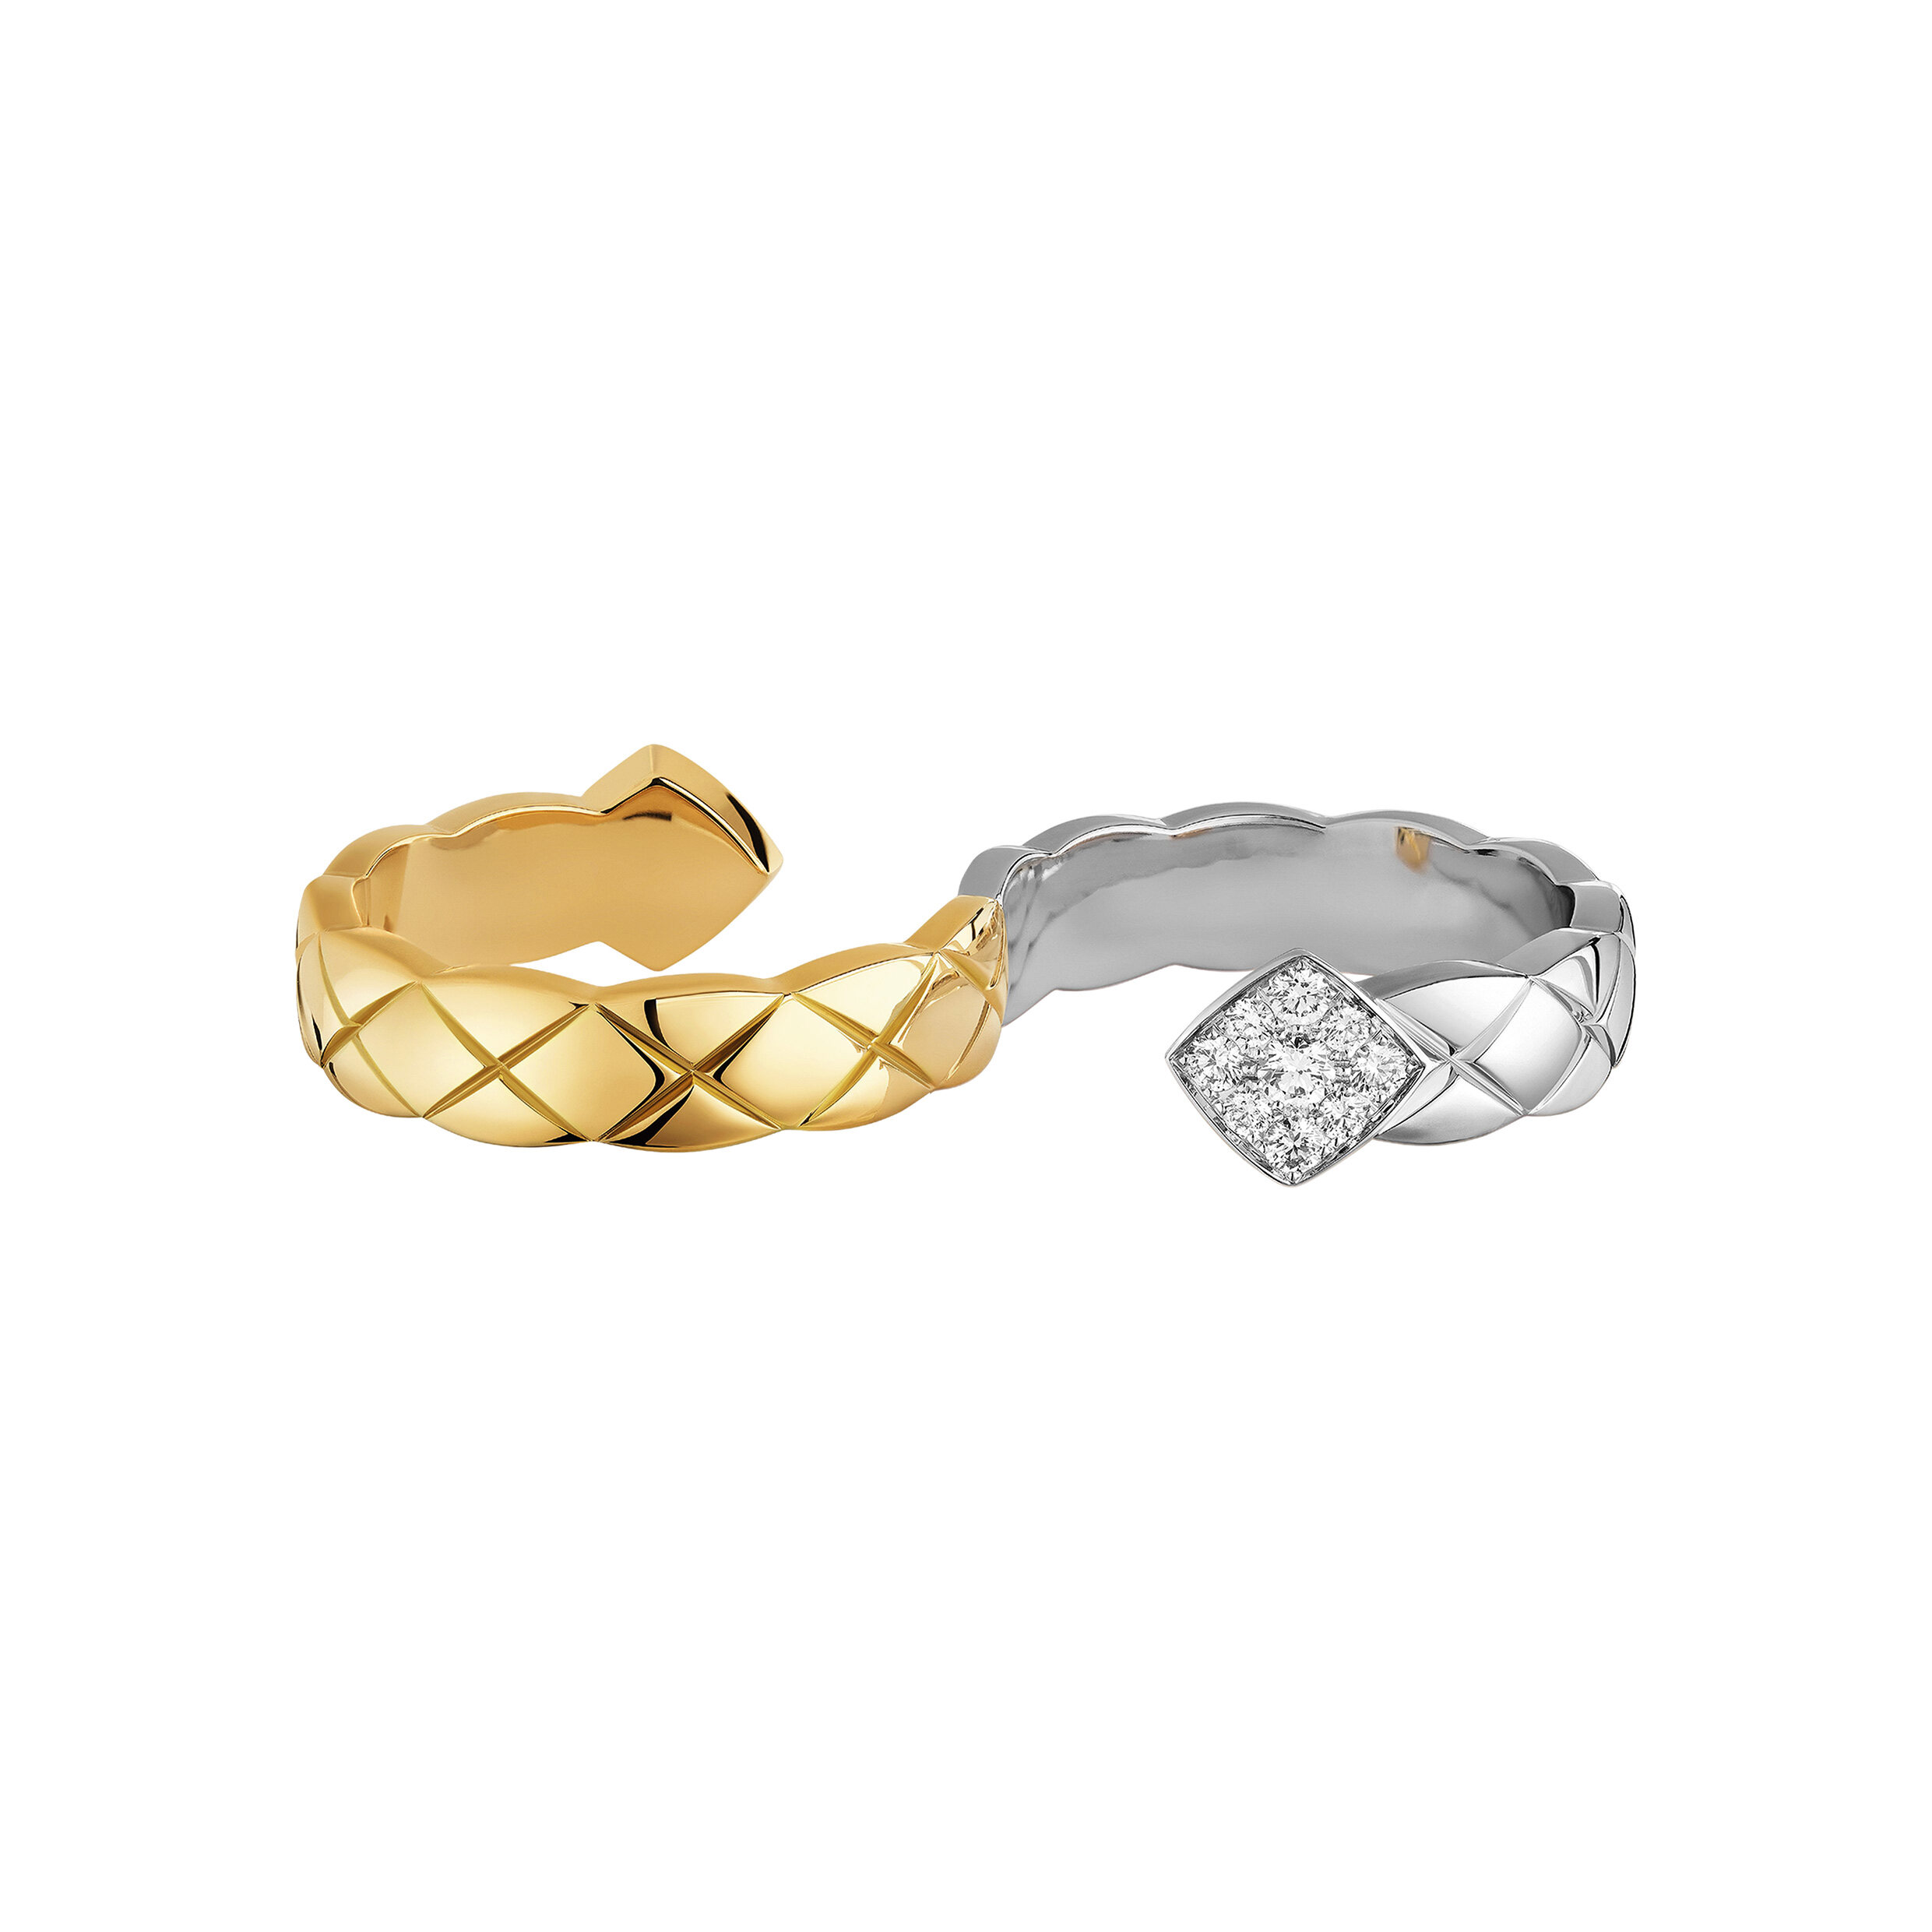 COCO CRUSH白金及黃金鑲鑽指環。資料由客戶提供